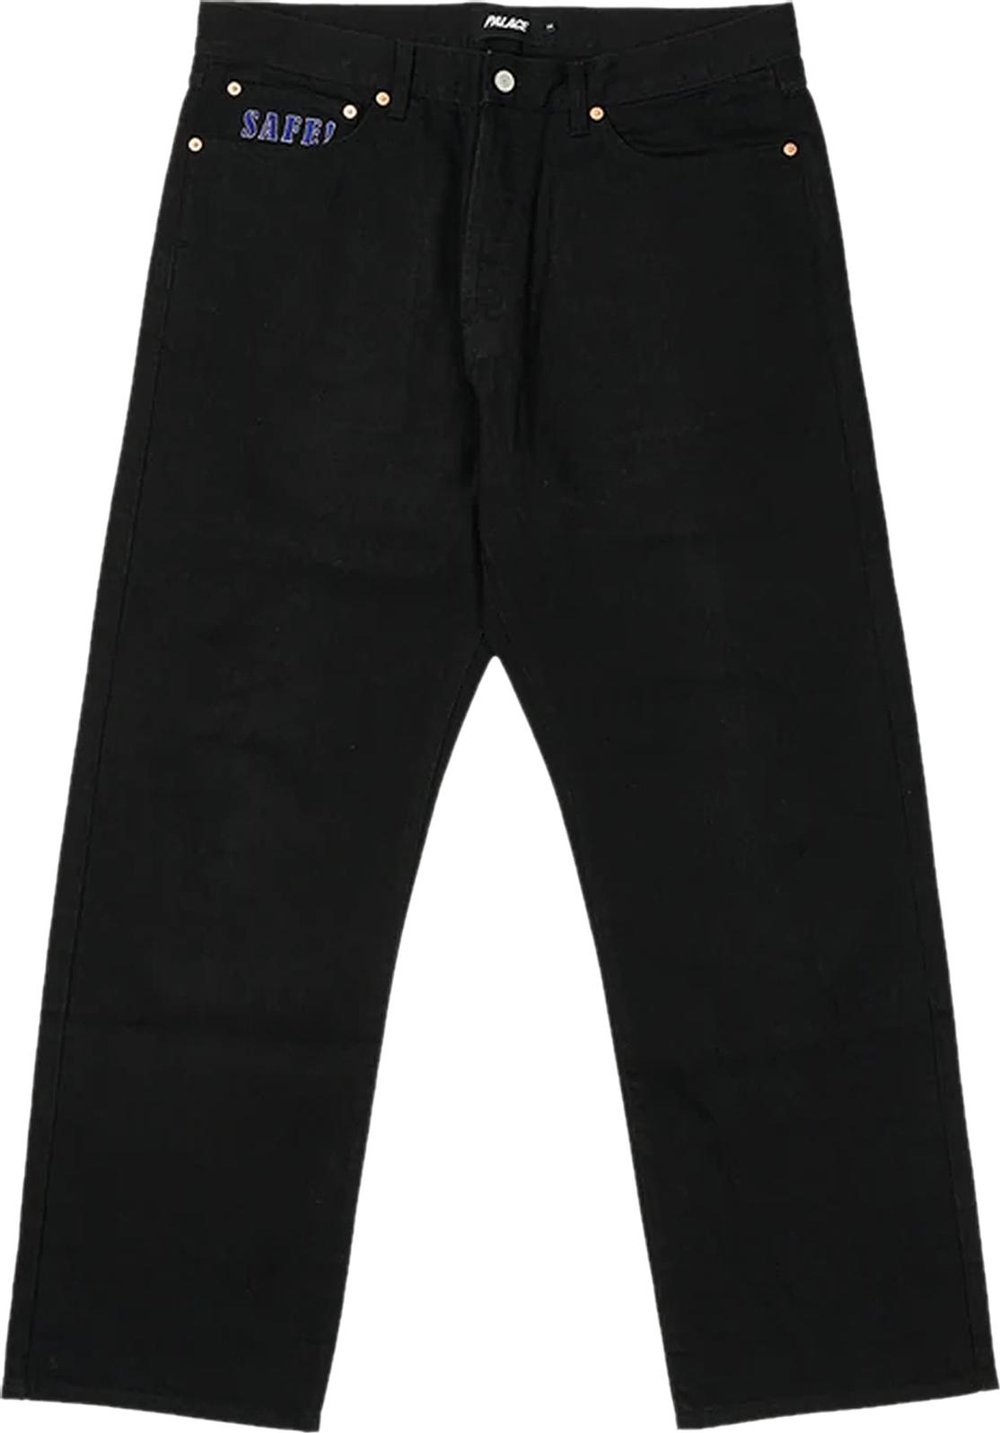 Buy Palace Baggies Jeans 'Black' - P22T041 | GOAT